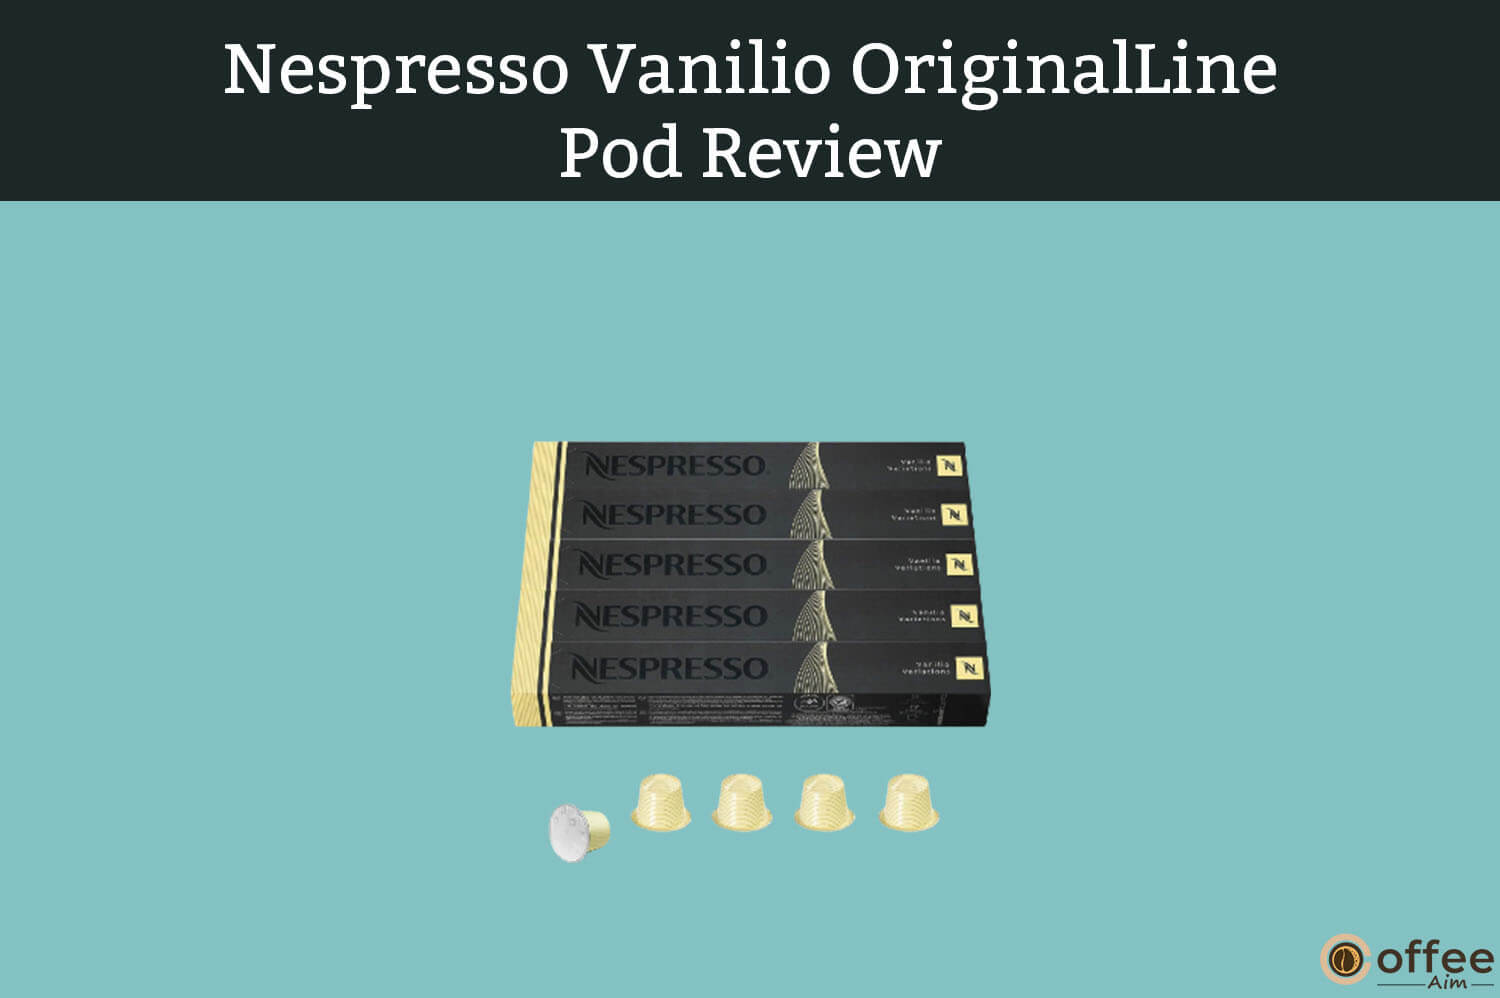 Featured image for the article"Nespresso Vanilio OriginalLine Pod Review"